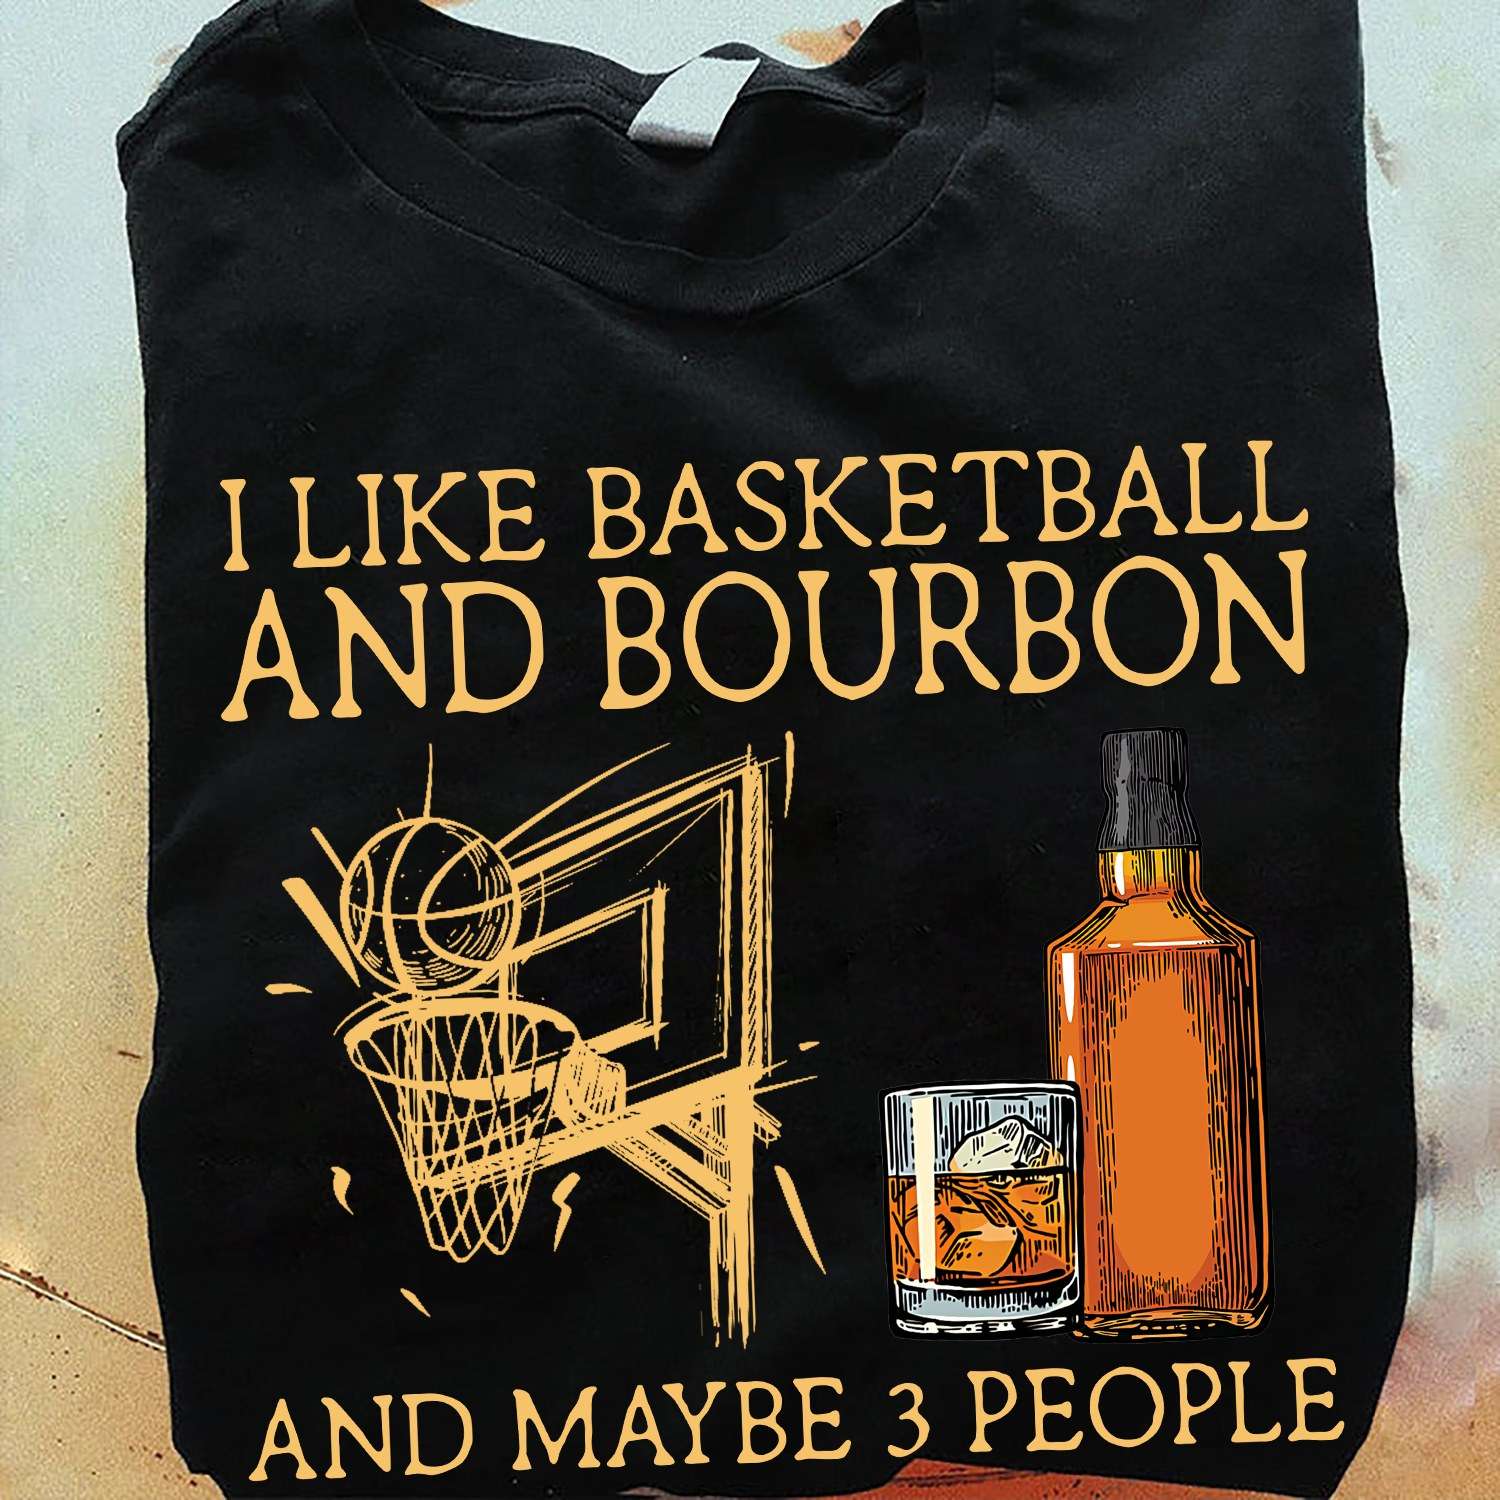 Basketball Bourbon - I like basketball and bourbon and maybe 3 people